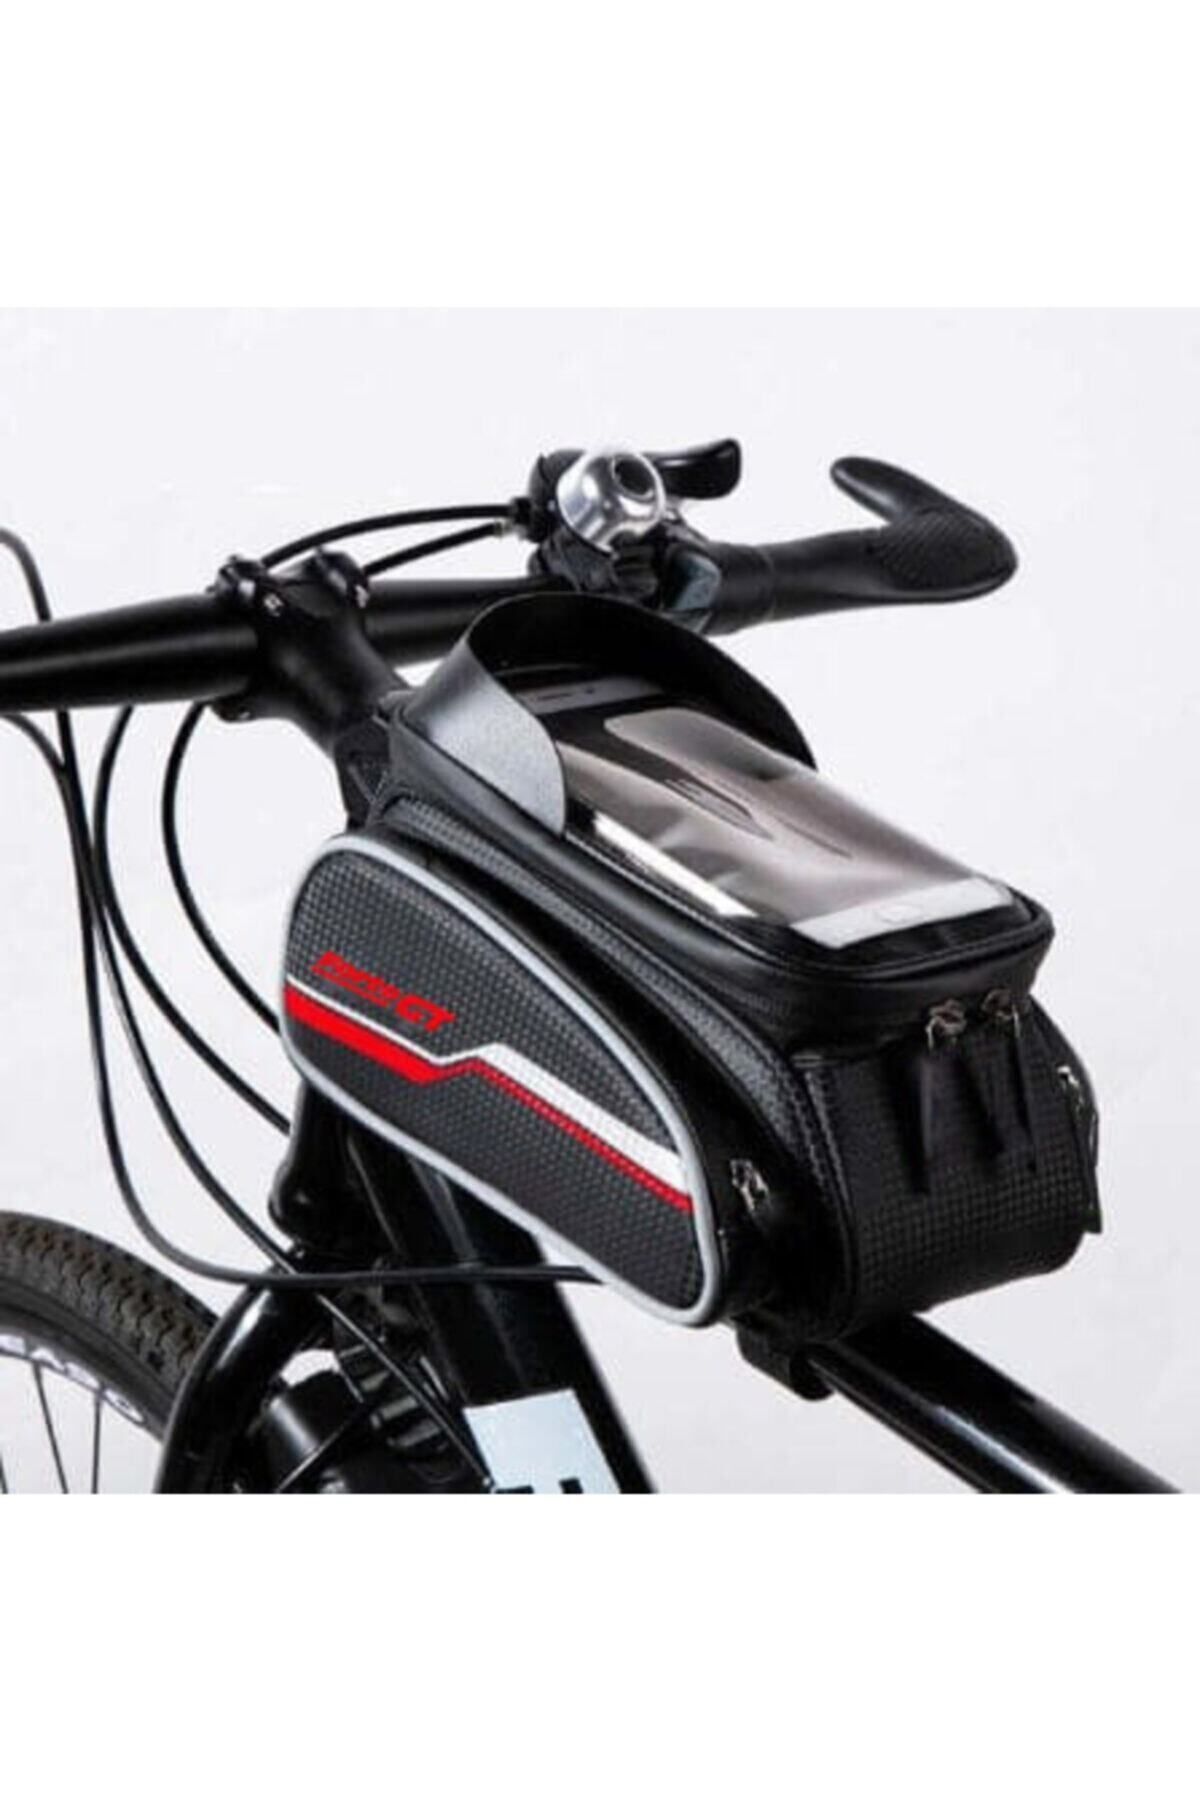 Forte Gt 816 6 inç Su Geçirmez Dokunmatik Ekran Bisiklet Kadro Üstü Çanta Kırmızı